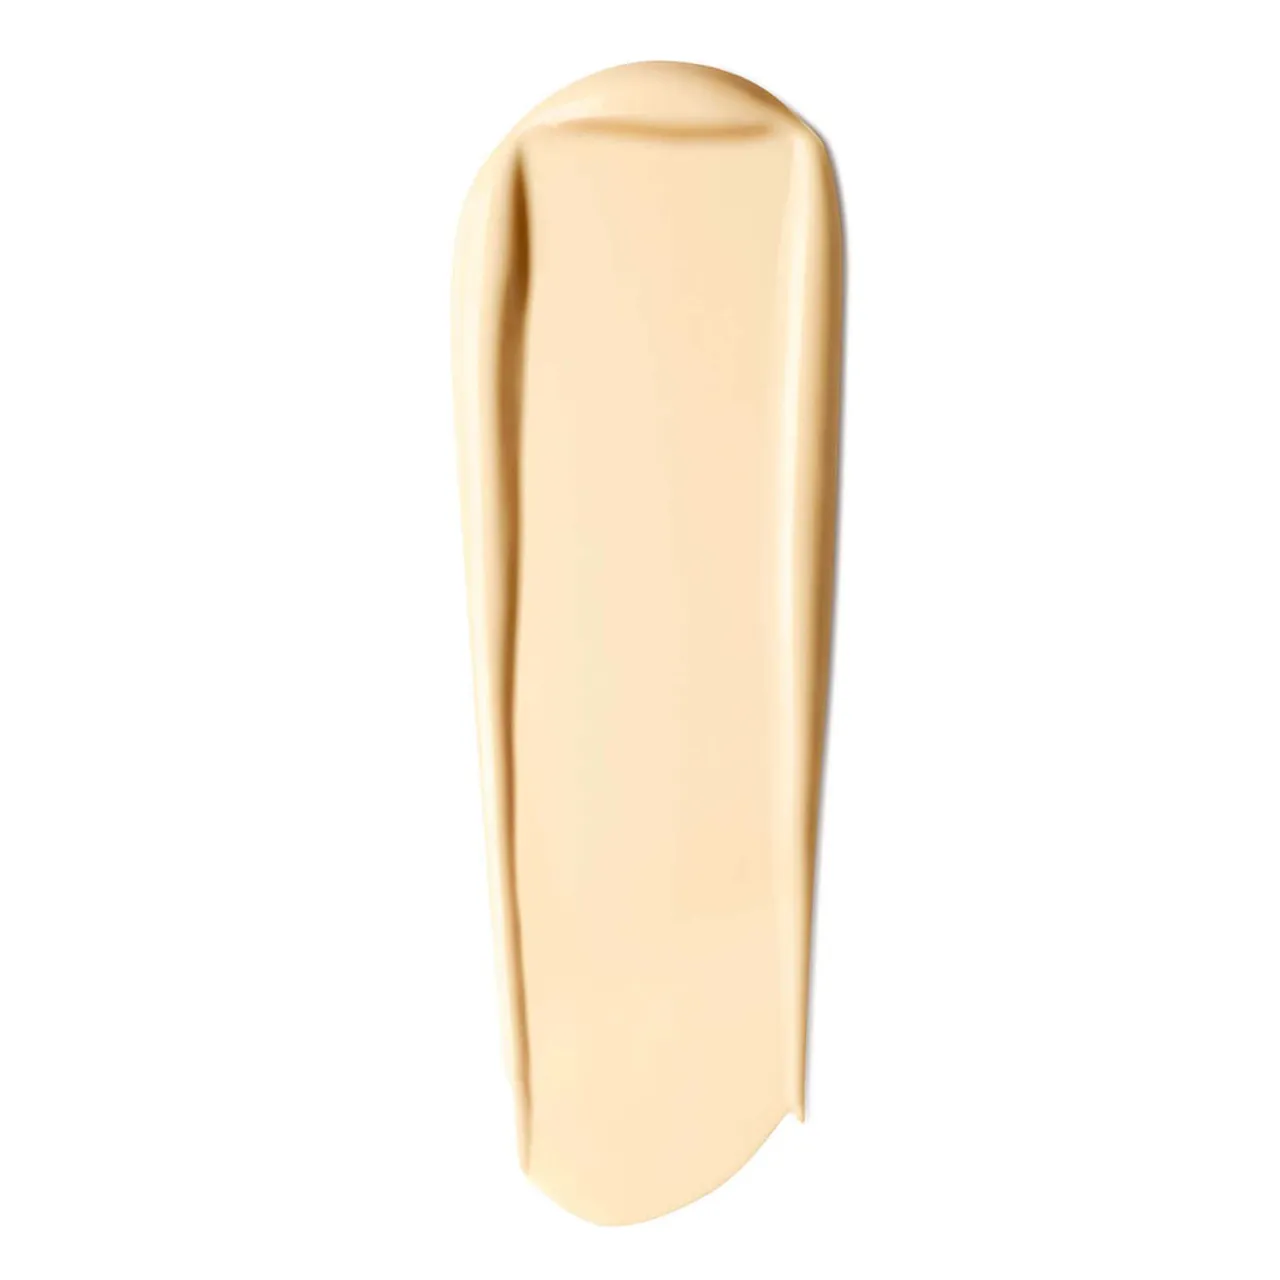 Guerlain Parure Gold Skin 24H No-Transfer High Perfection Foundation 35ml (Various Shades) - 0W Warm / Doré